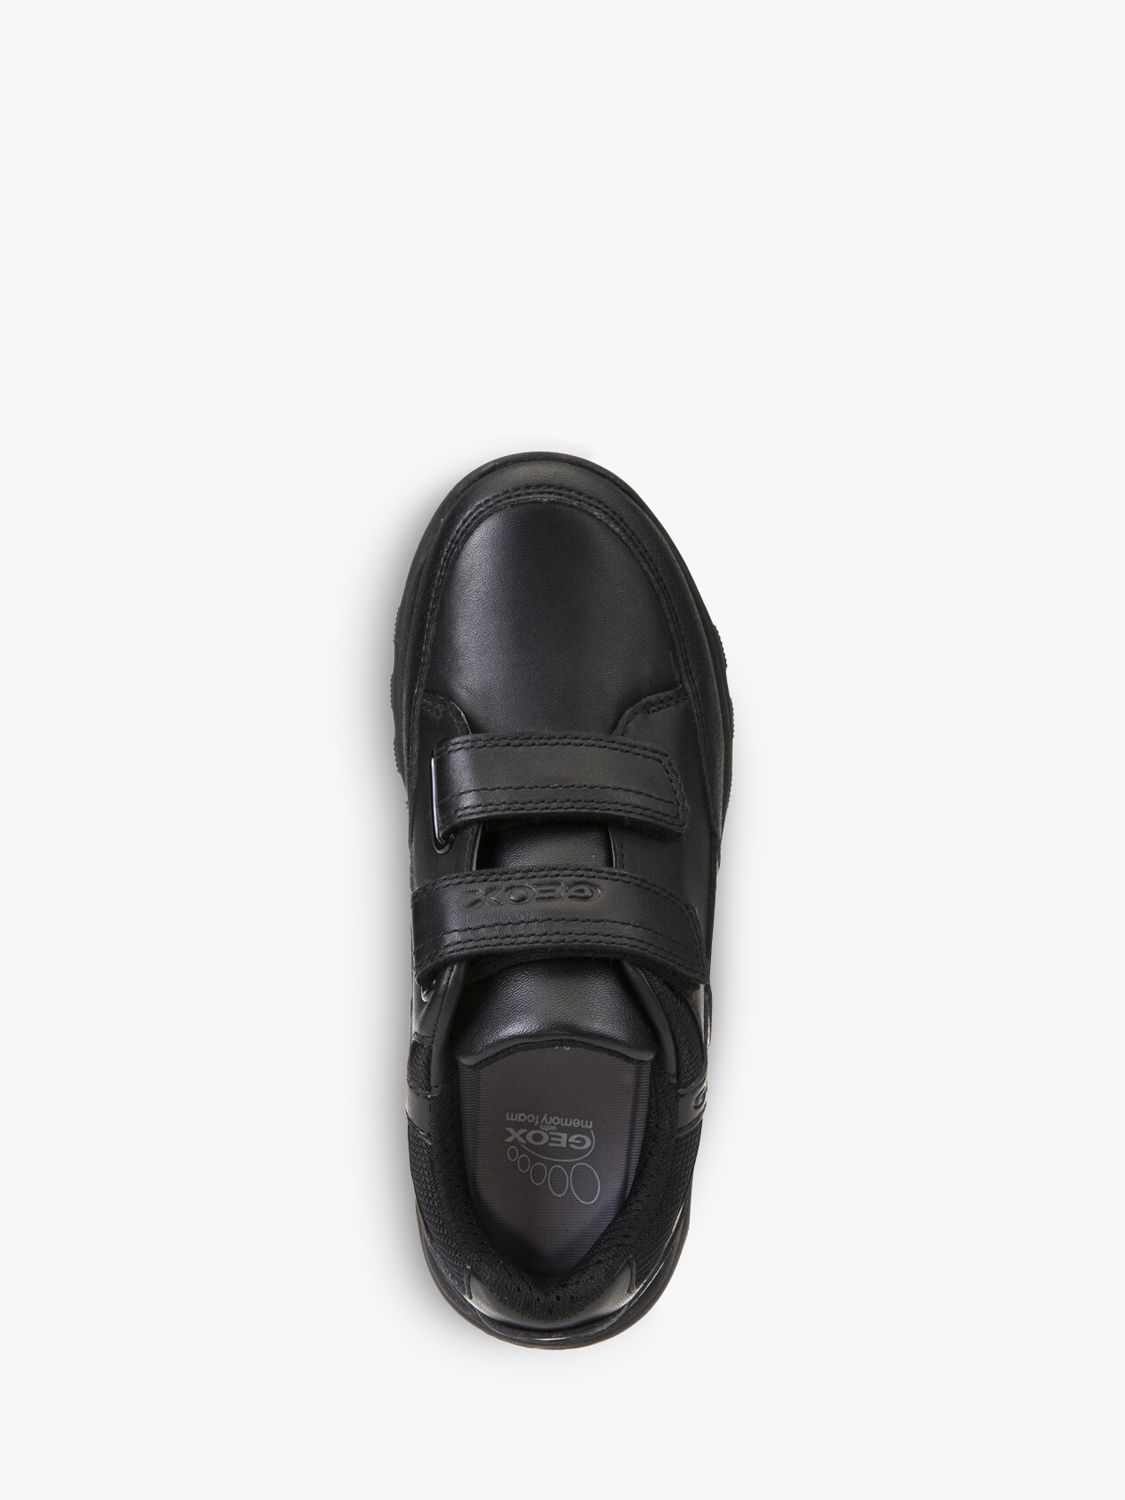 Normalización Hermano radical Geox Kids' Xunday Shoes, Black at John Lewis & Partners